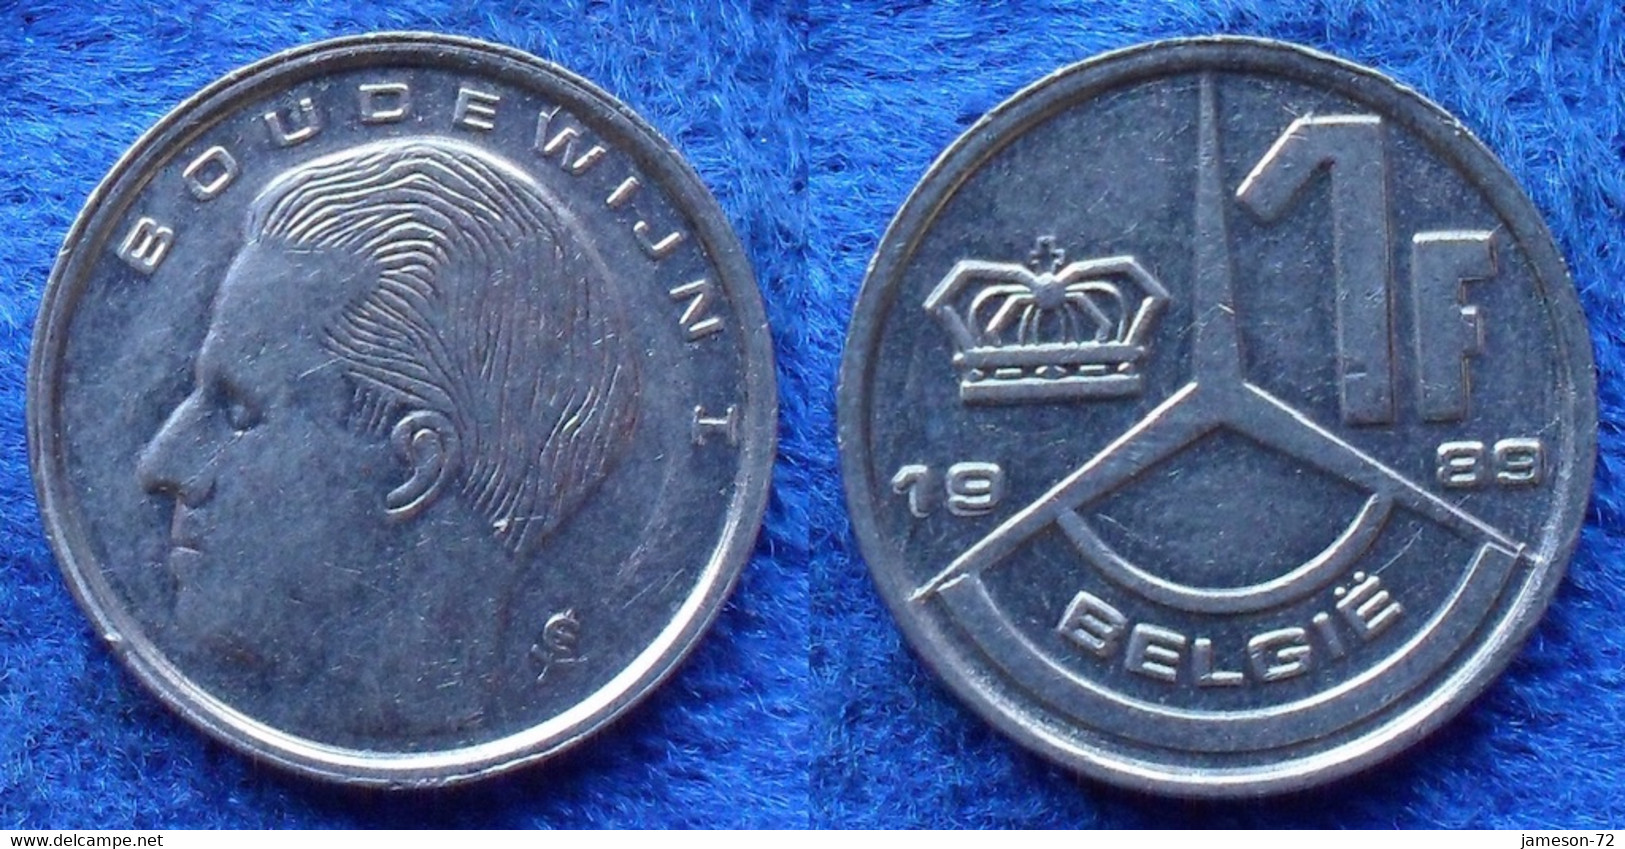 BELGIUM - 1 Franc 1989 Flemish KM#171 Baudouin I (1951-1993) - Edelweiss Coins - Ohne Zuordnung